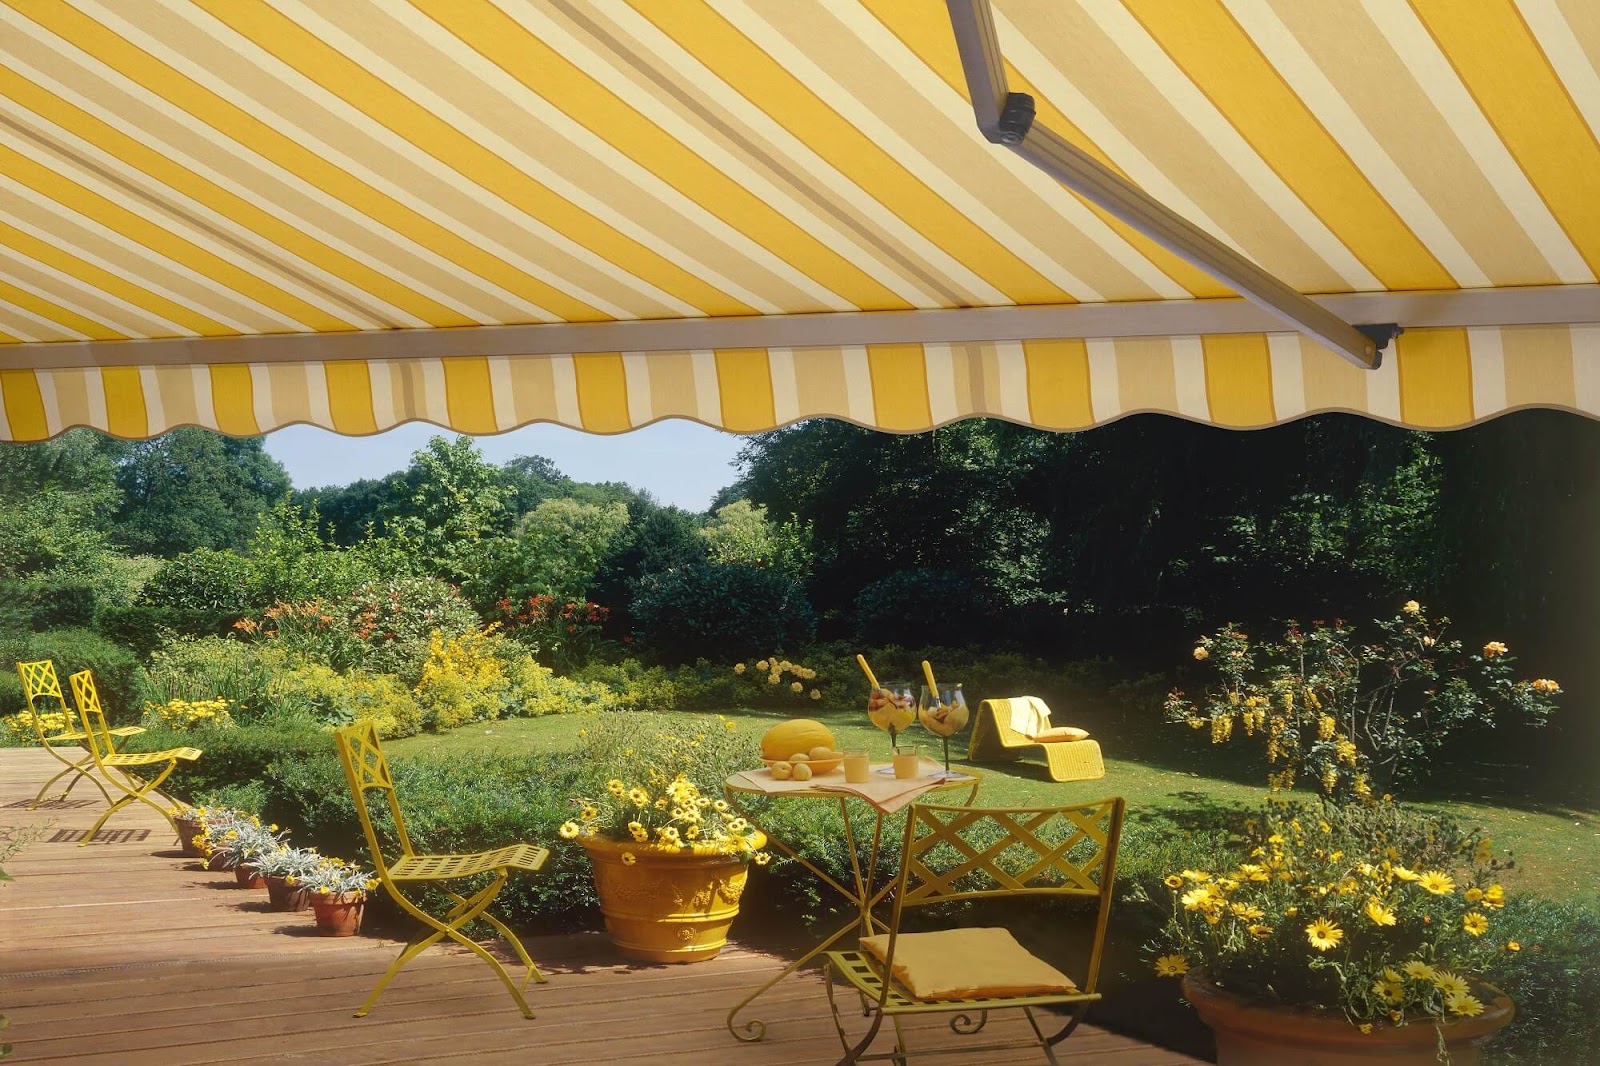 Lemon-striped folding retractable canopy overlooking a garden